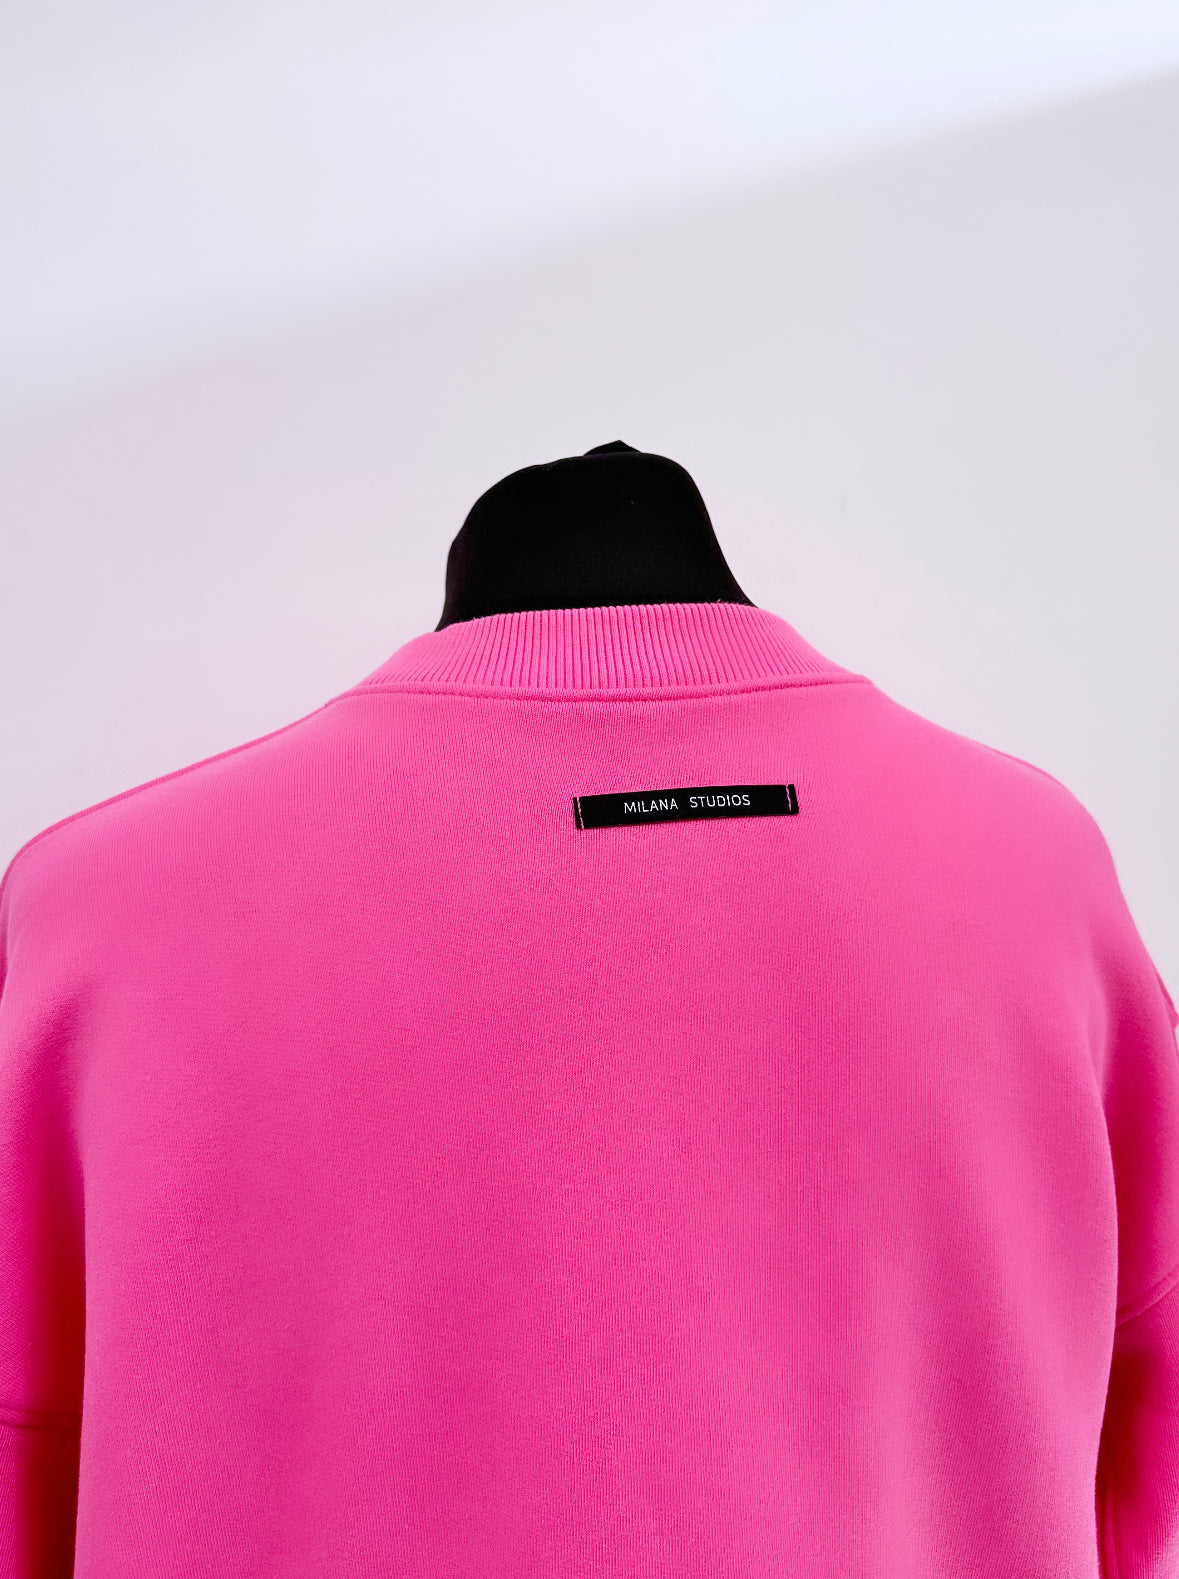 Hot Pink Heavyweight Graphic Open Hem Sweatshirt.